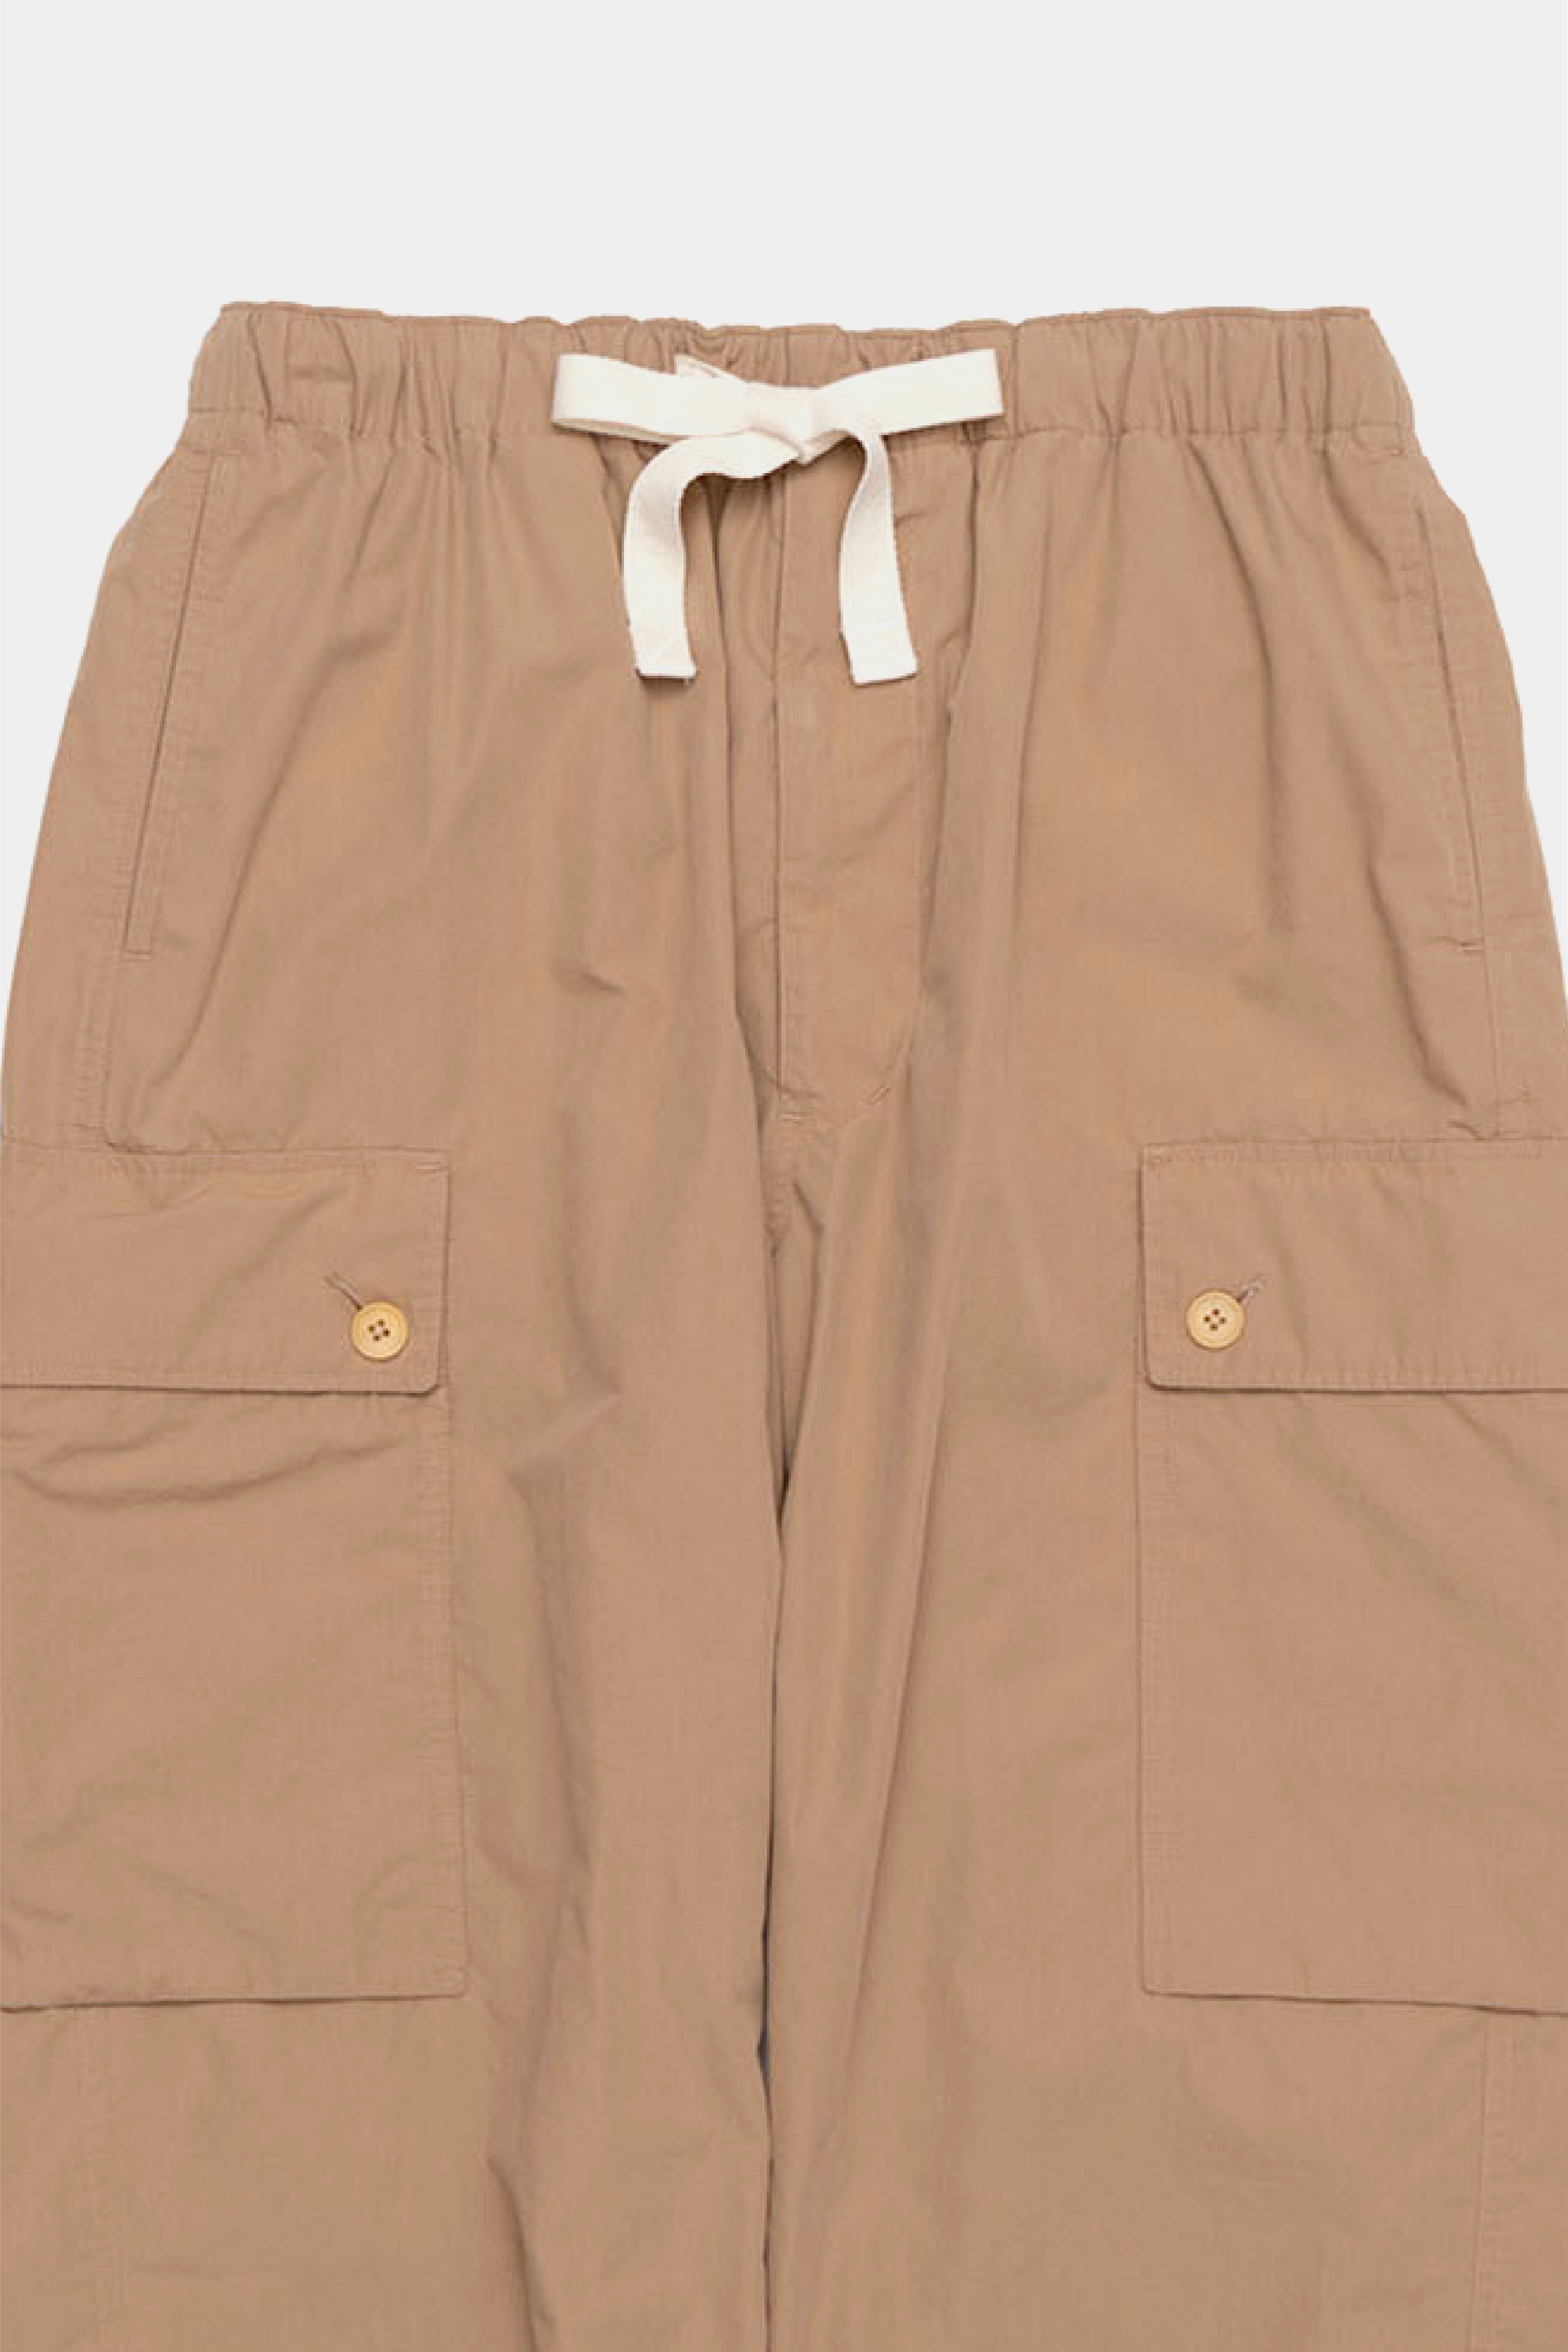 Selectshop FRAME - NANAMICA Easy Cargo Pants Bottoms Concept Store Dubai